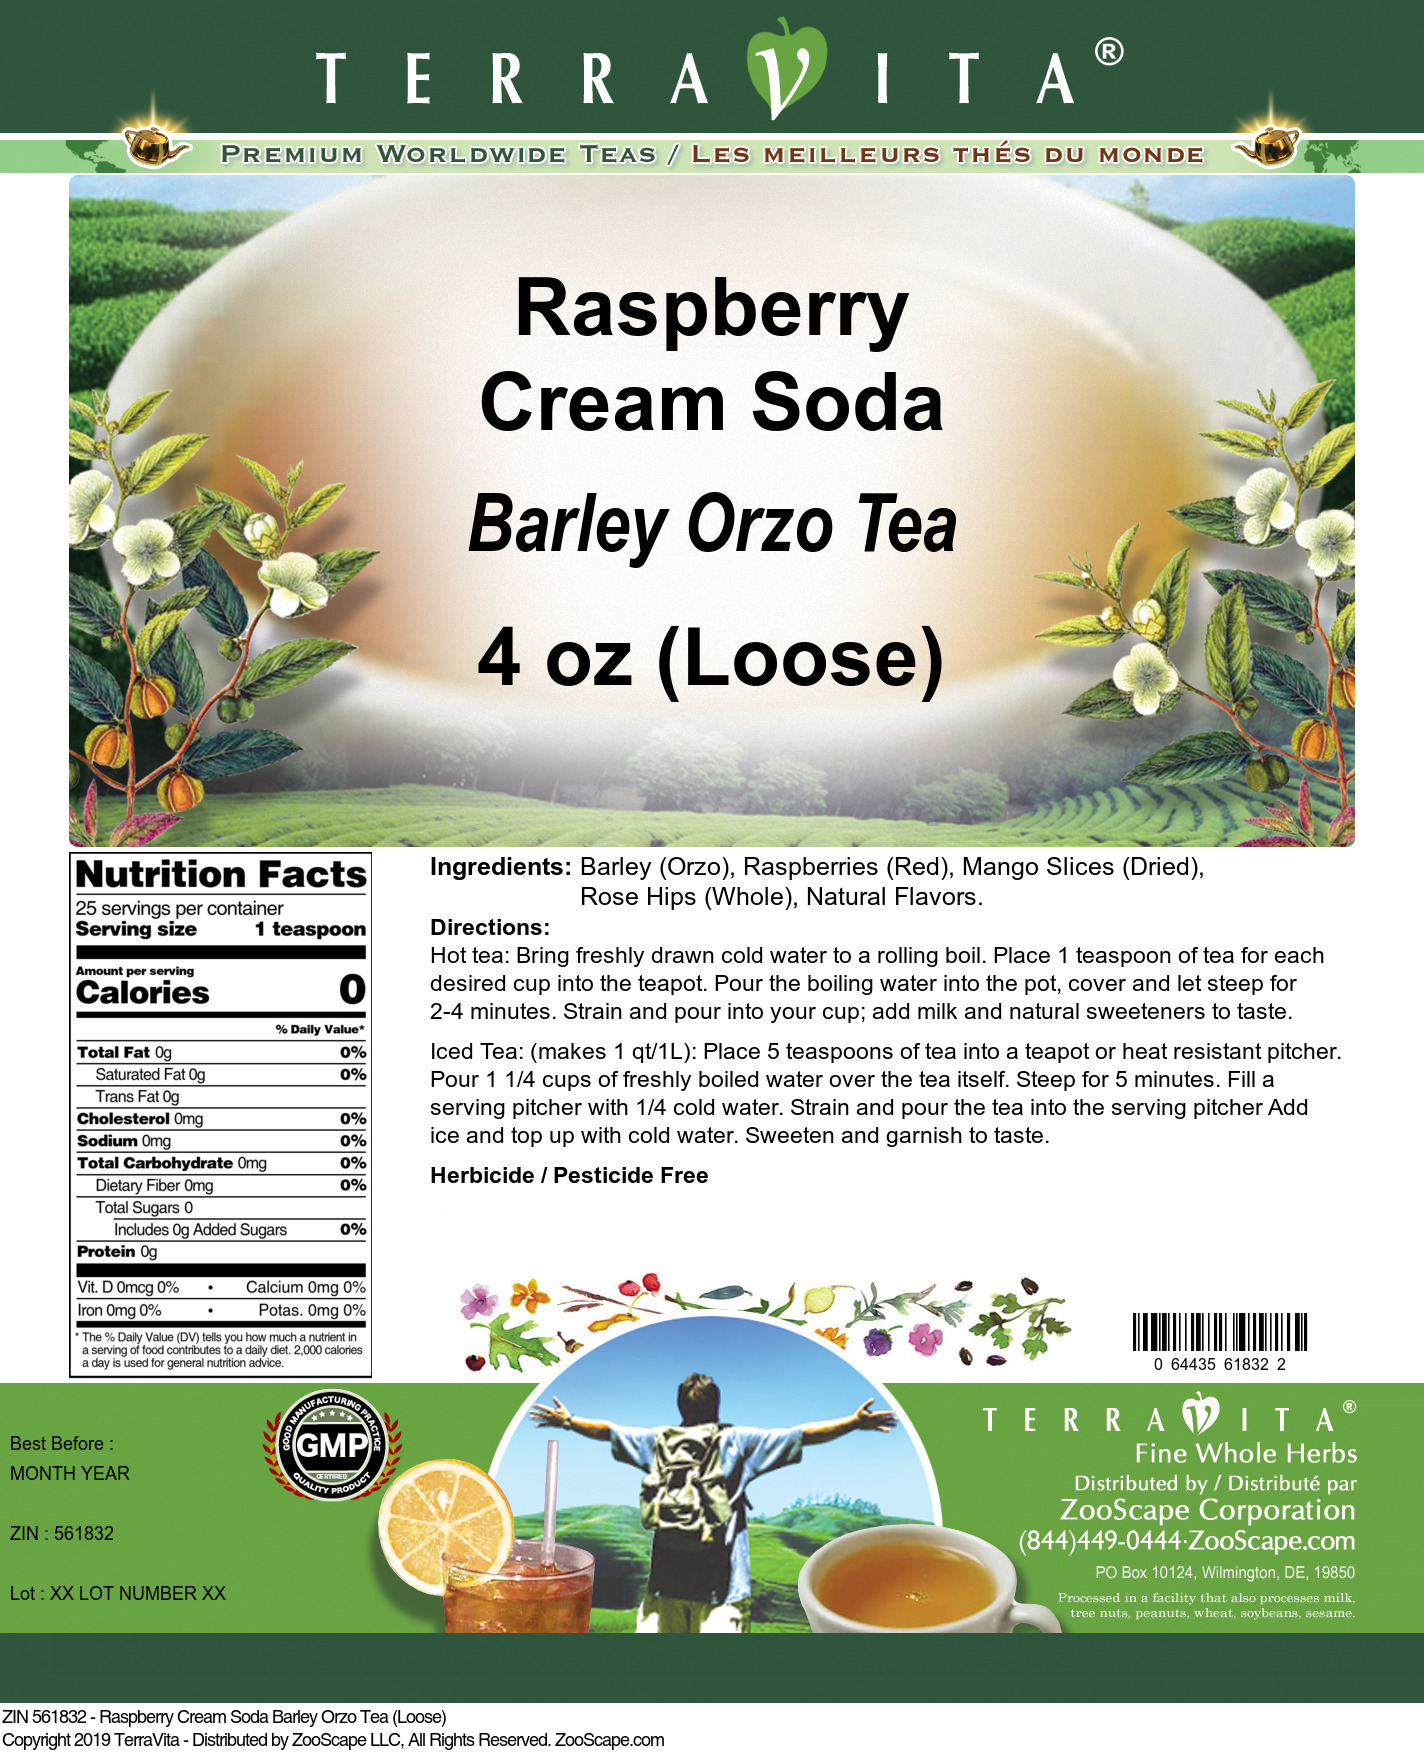 Raspberry Cream Soda Barley Orzo Tea (Loose) - Label